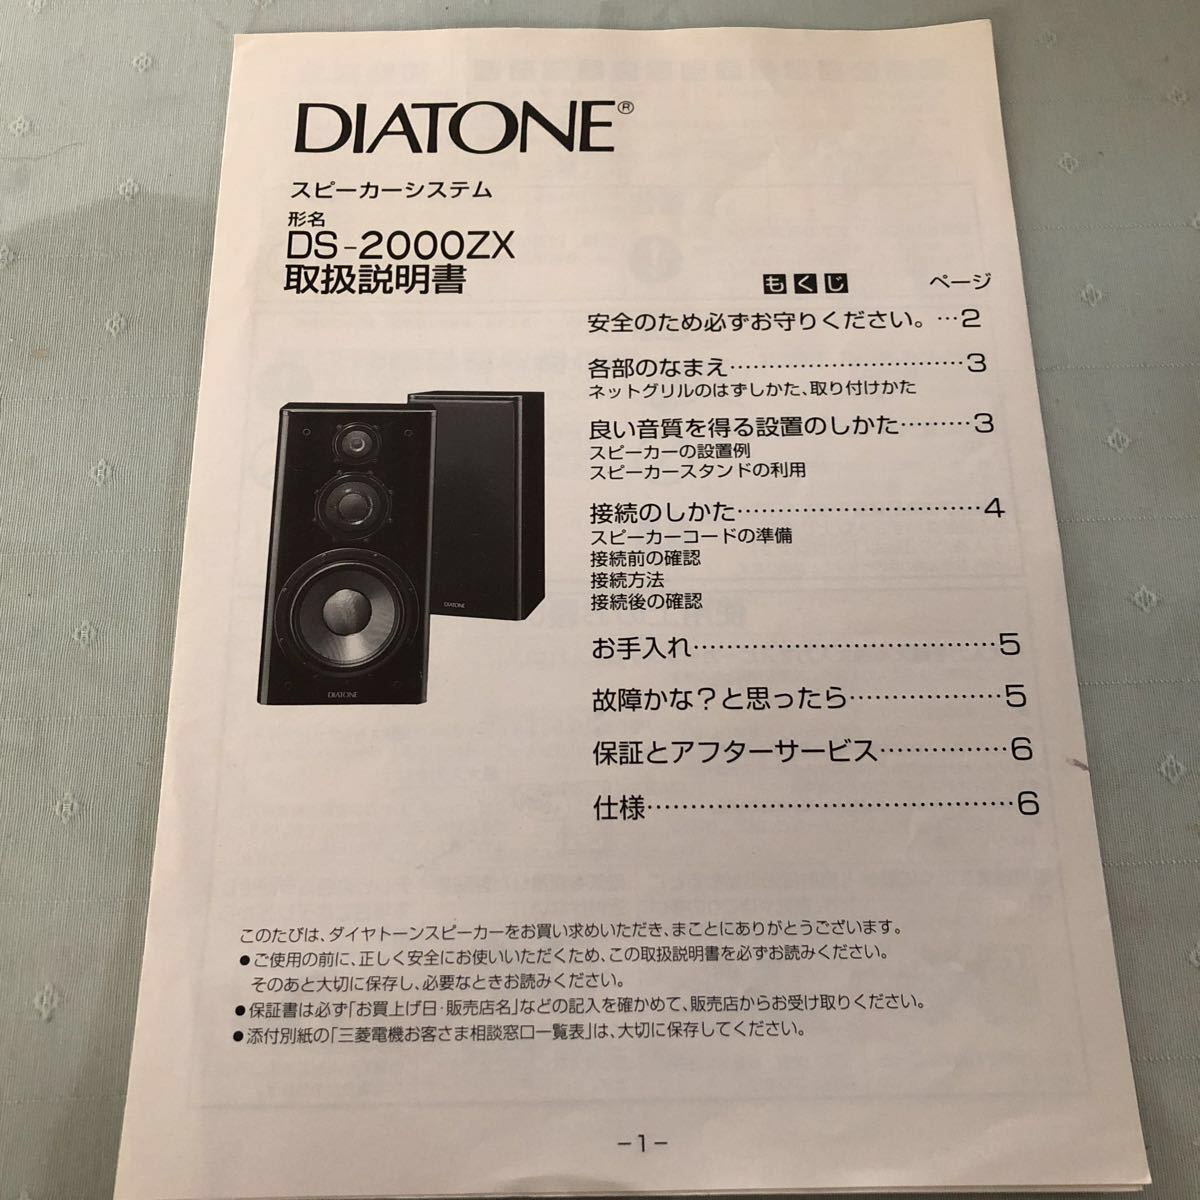 使用DIATONE diatone DS-2000ZX使用說明書 原文:DIATONE ダイヤトーン DS-2000ZX 取扱説明書付